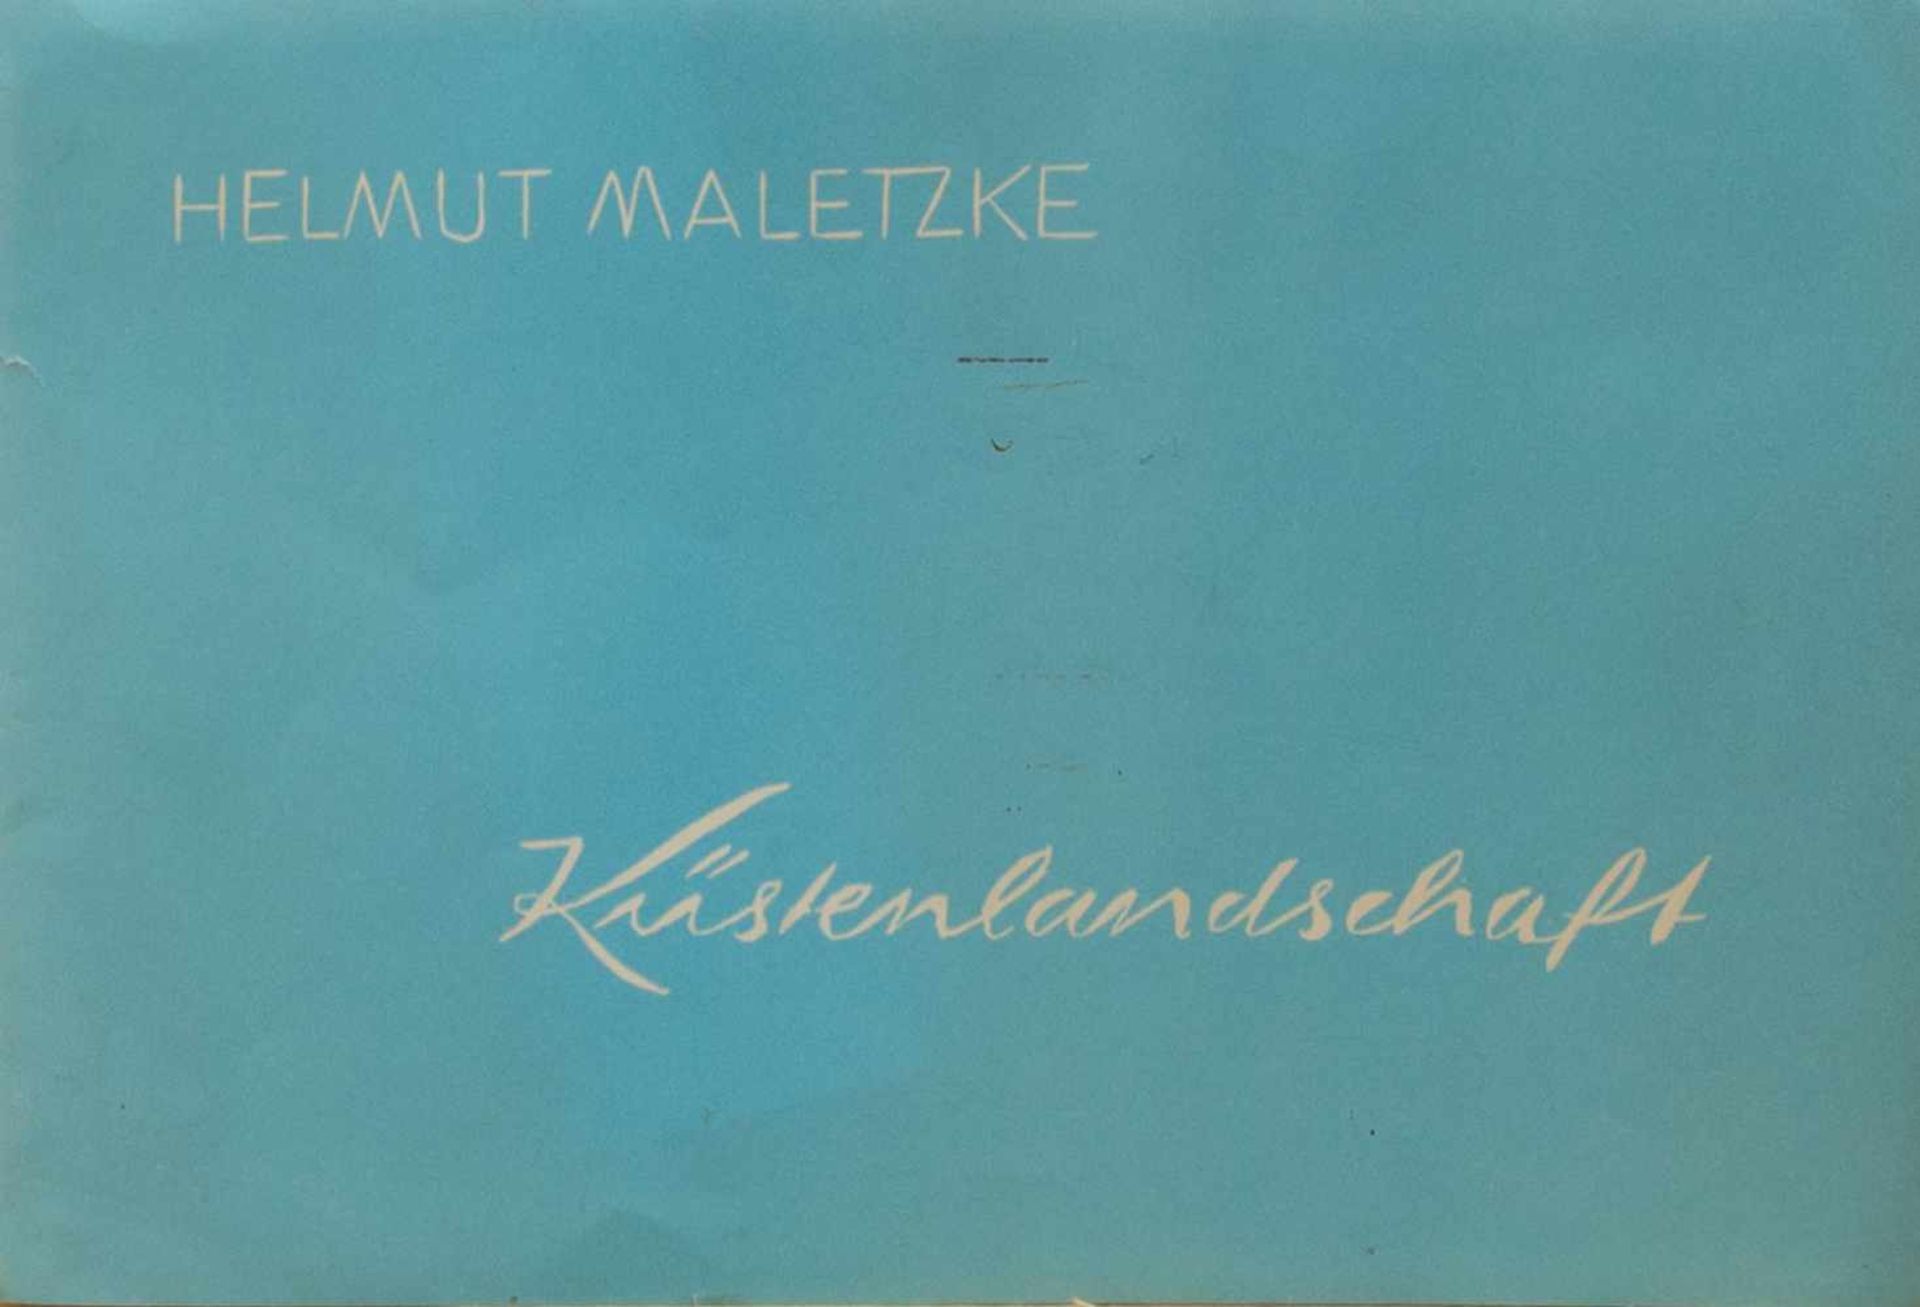 Helmut Maletzke(Neustettin 1920 - 2017, deutscher Maler, Grafiker u. Schriftsteller, lebte u.